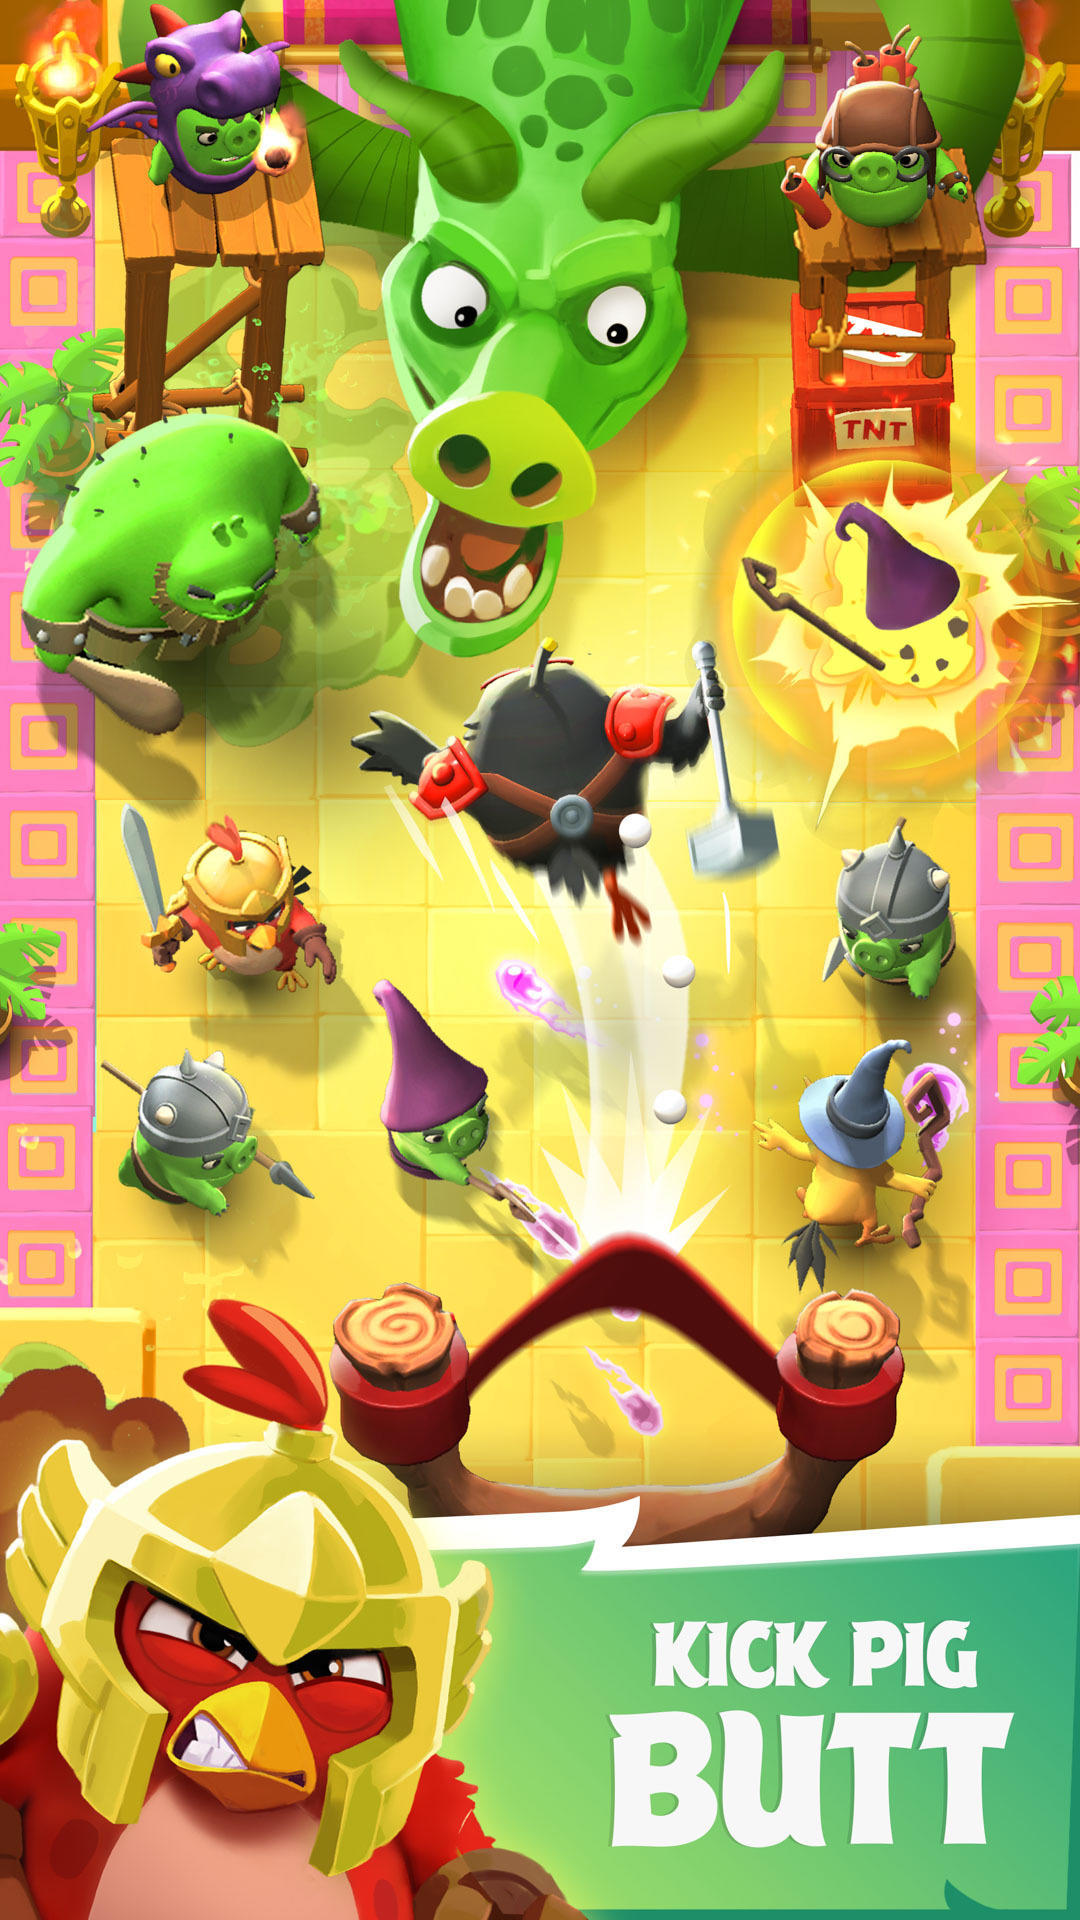 Angry Birds Kingdom - Players' Reviews